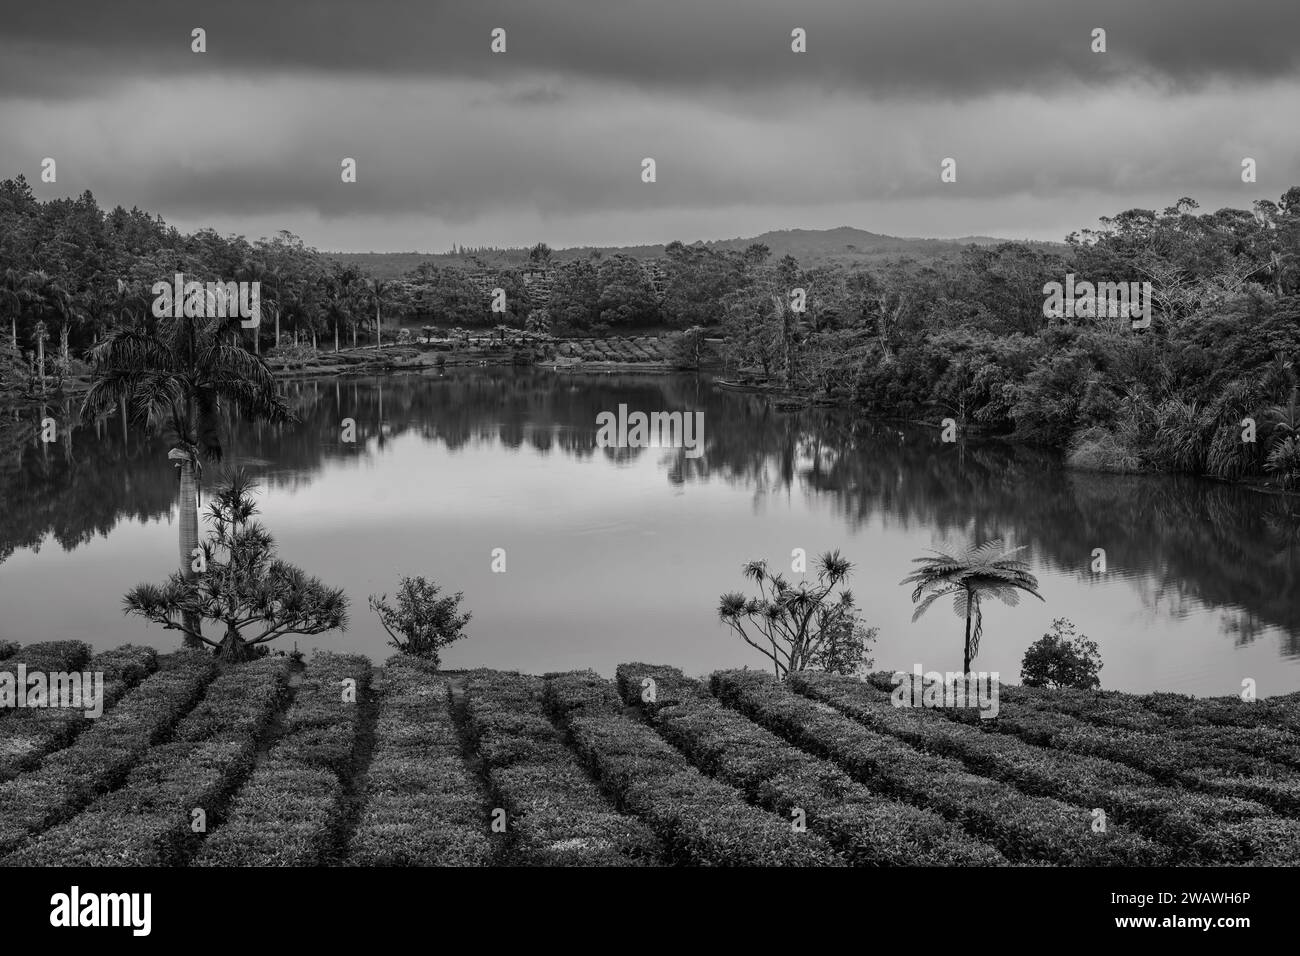 Tea Plantation and Lake in Bois Cheri, Mauritius in Monochrome Black and White Stock Photo